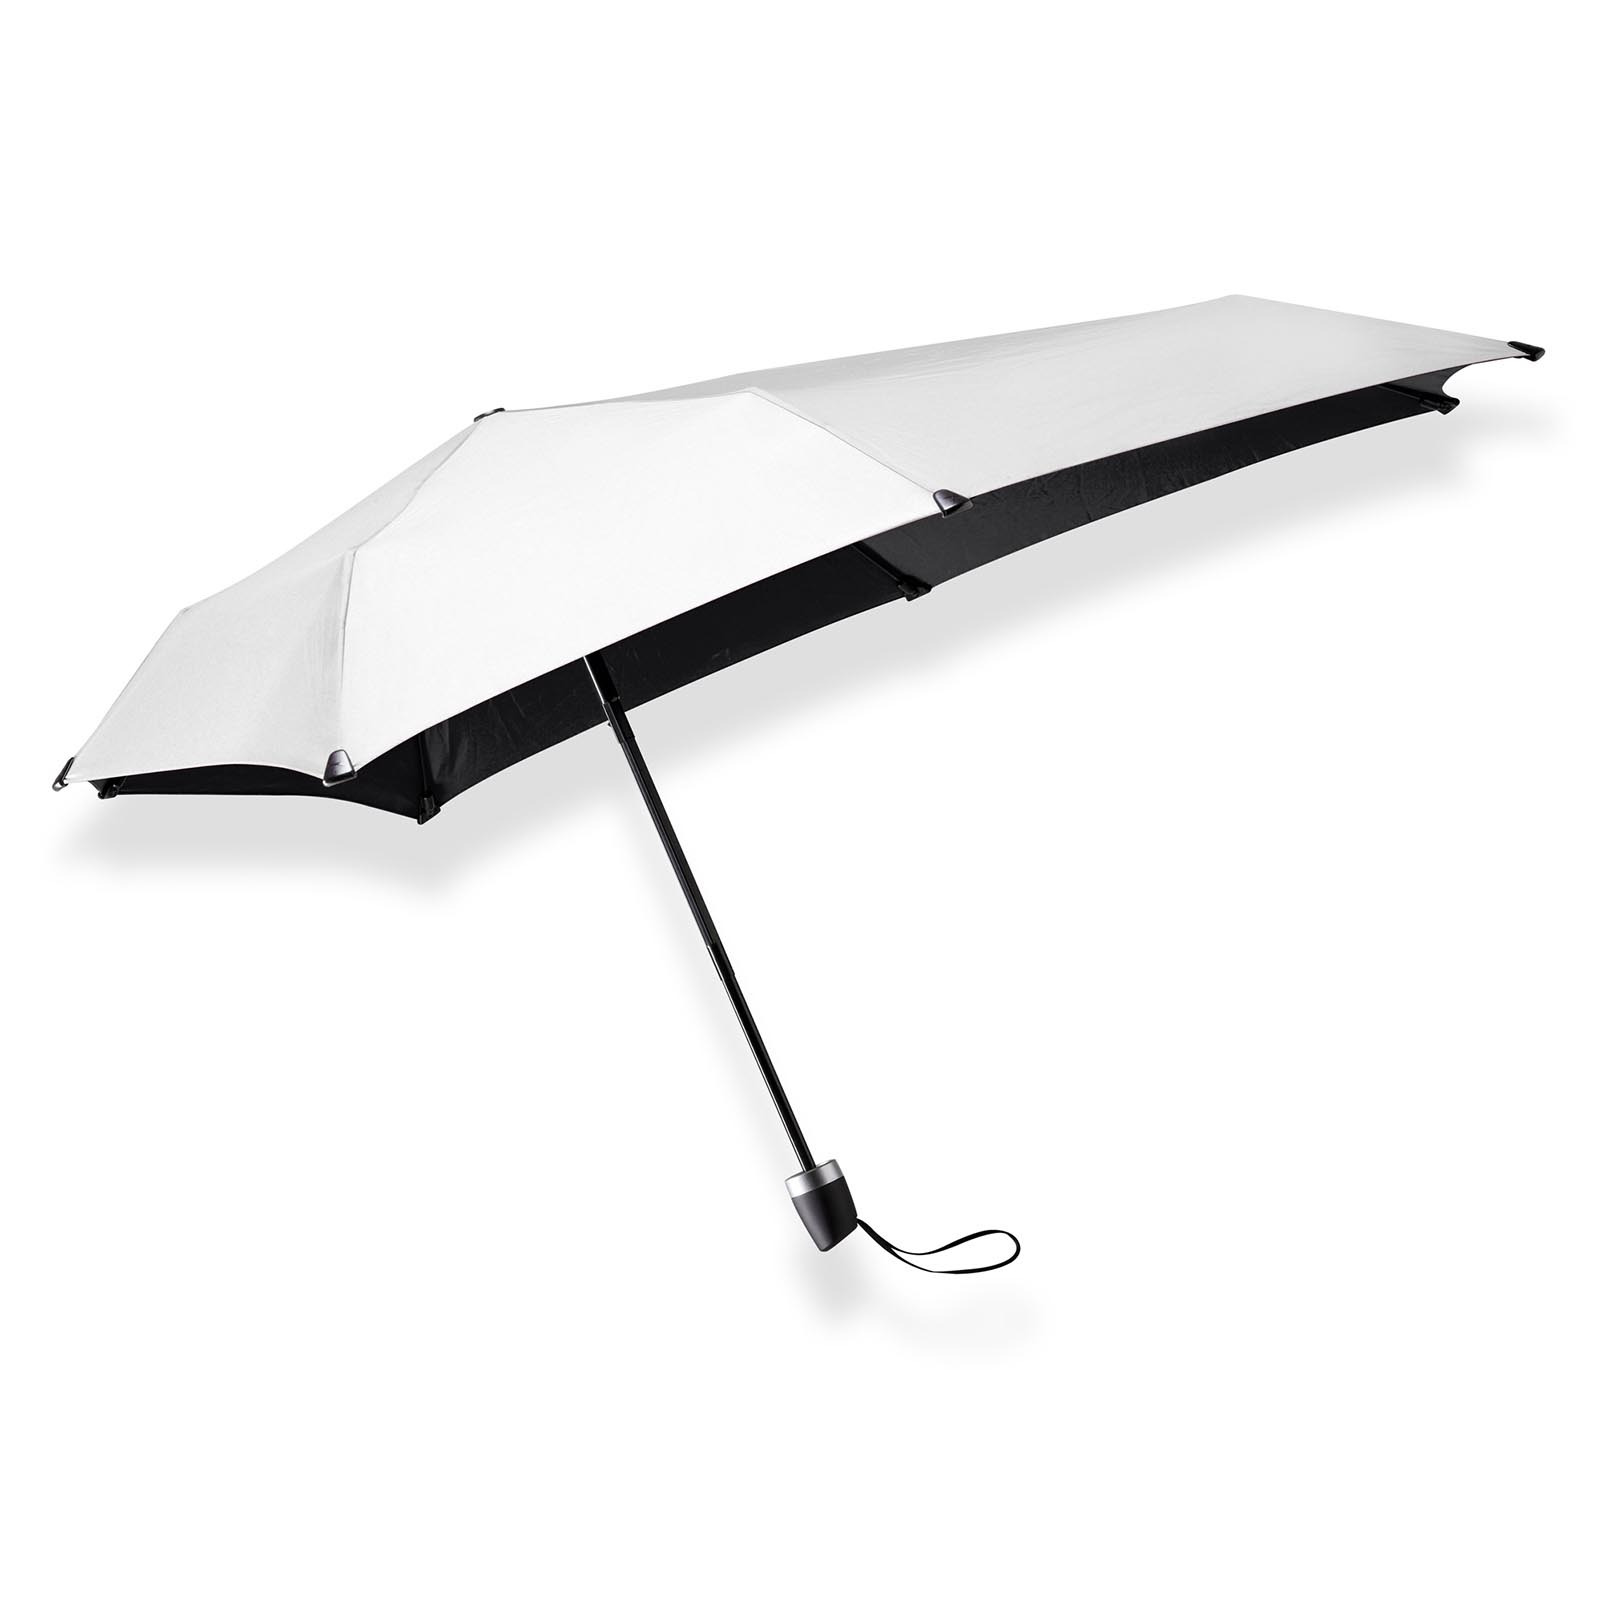 Netjes Isaac Conventie Zilveren opvouwbare paraplu mini kopen? senz° mini shiny silver